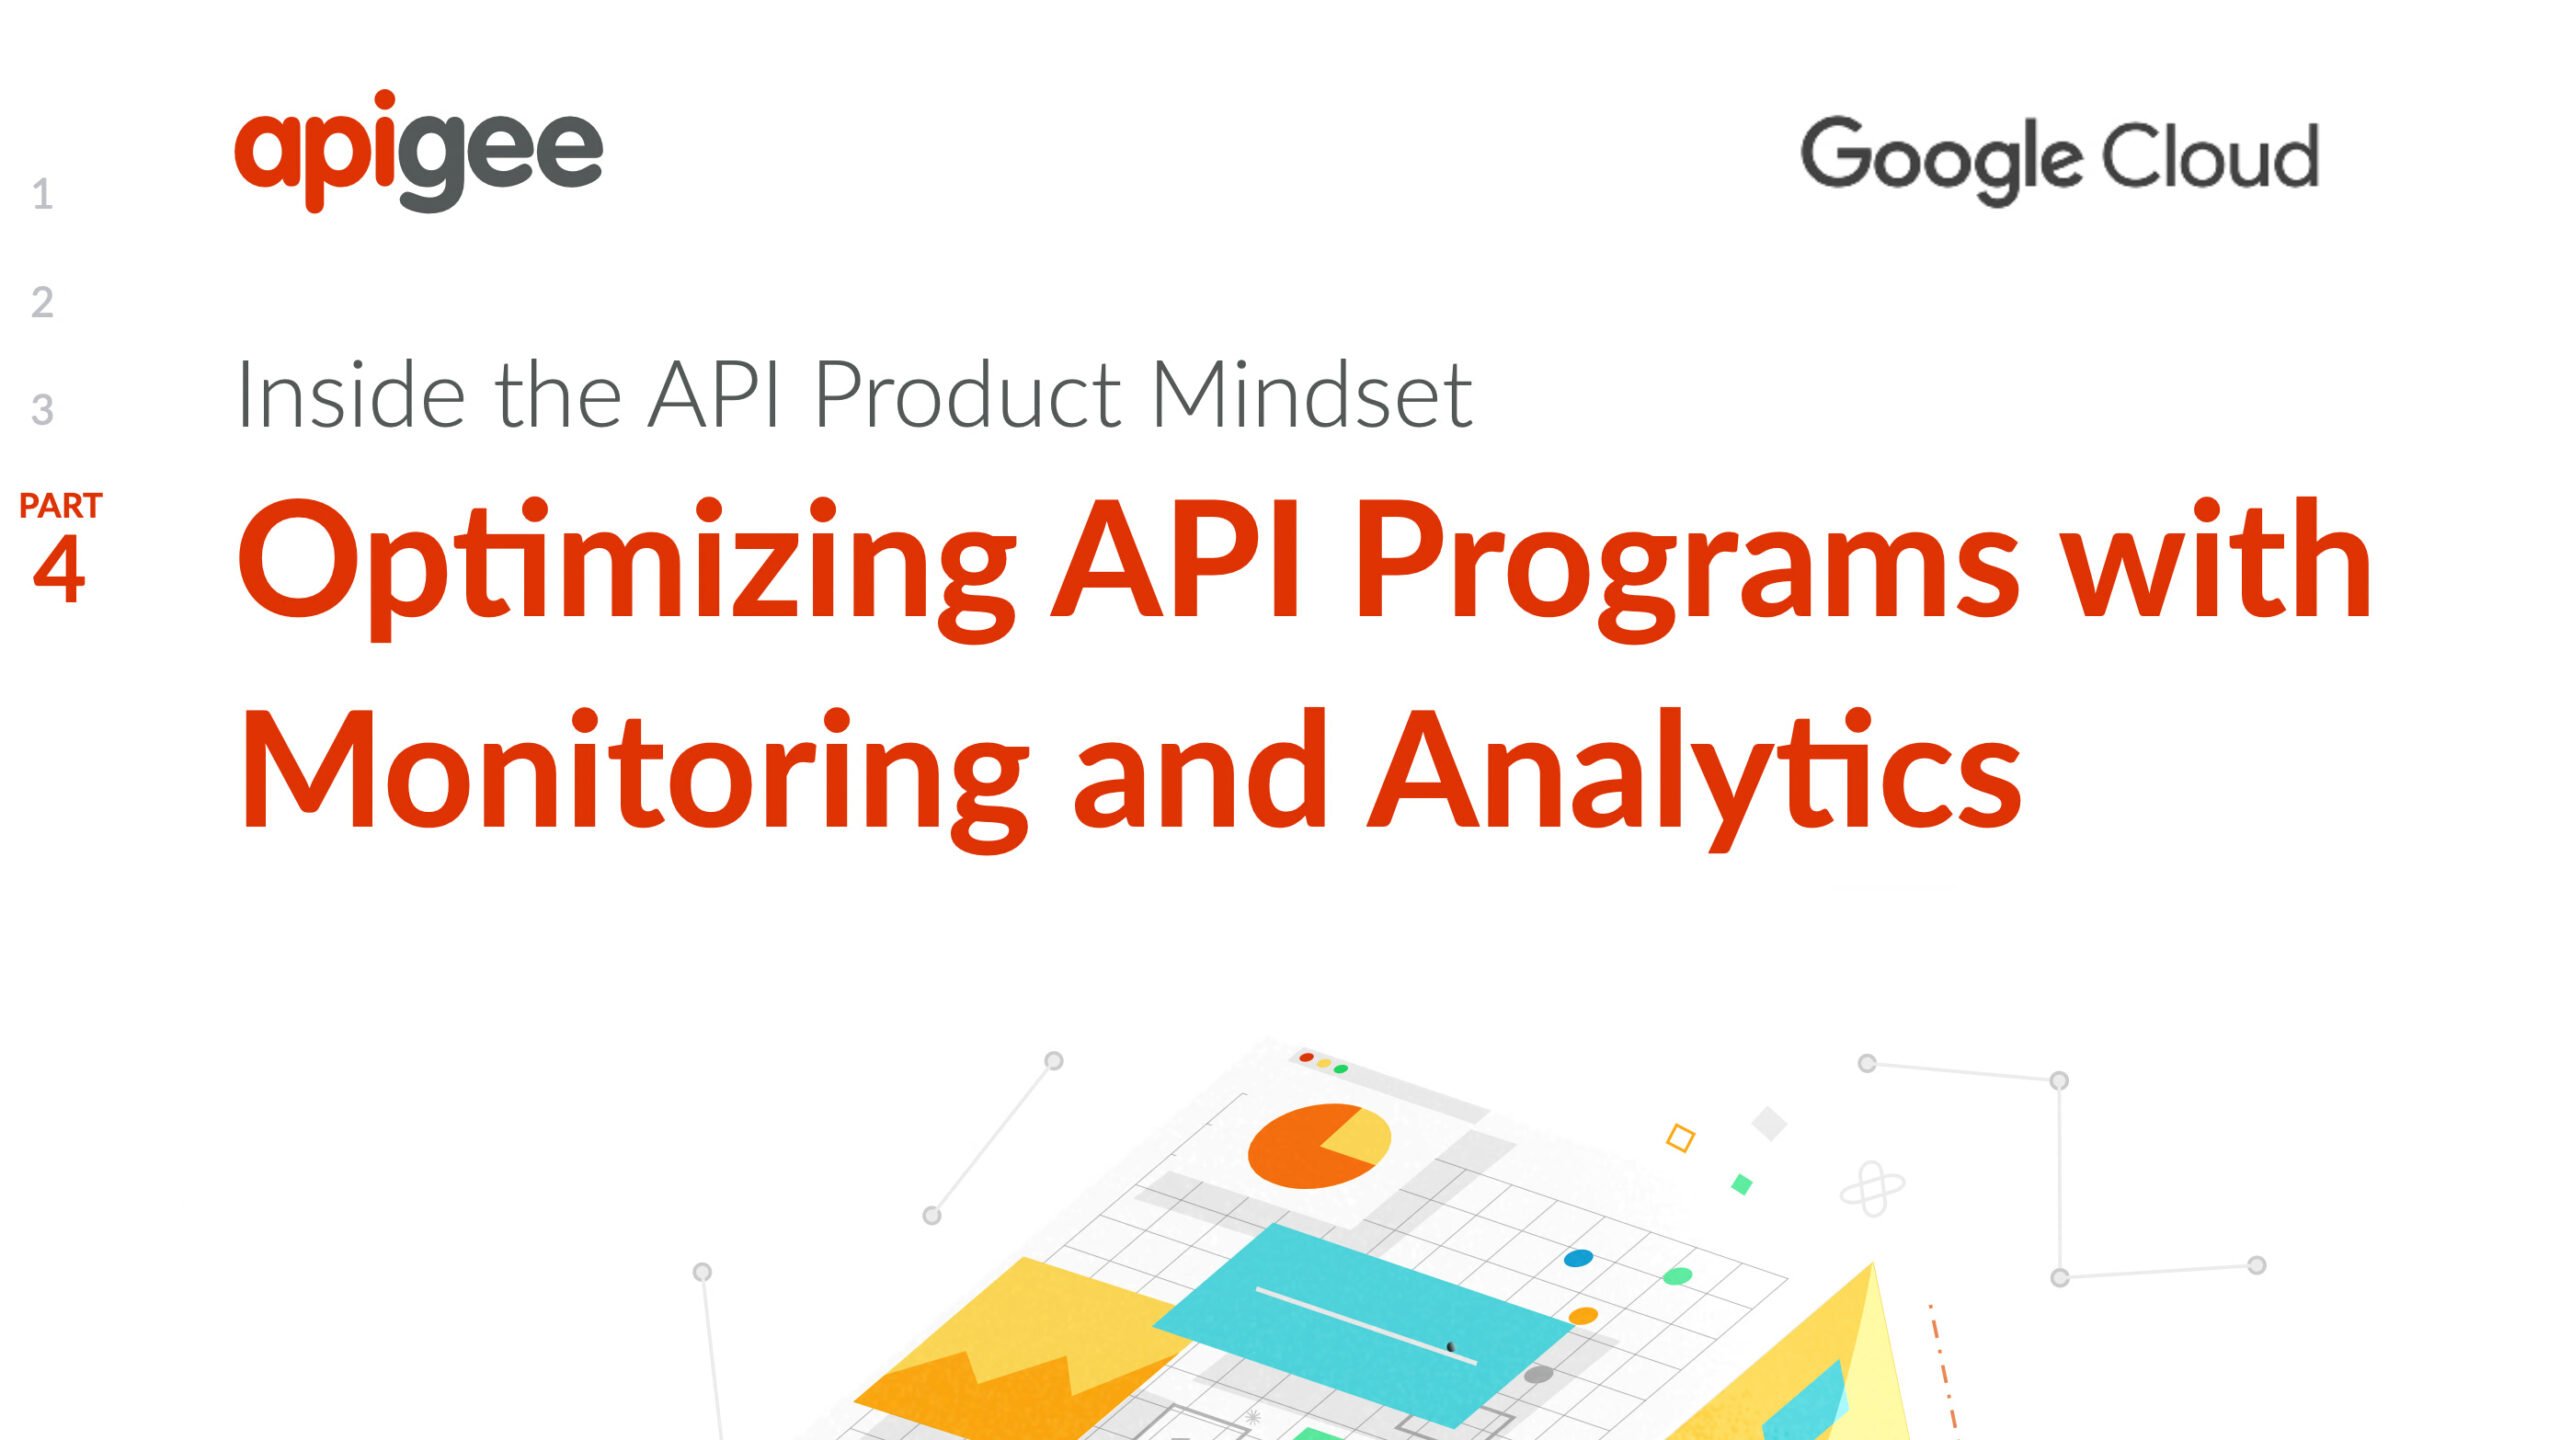 3. Optimizing API Programs with Monitoring and Analytics